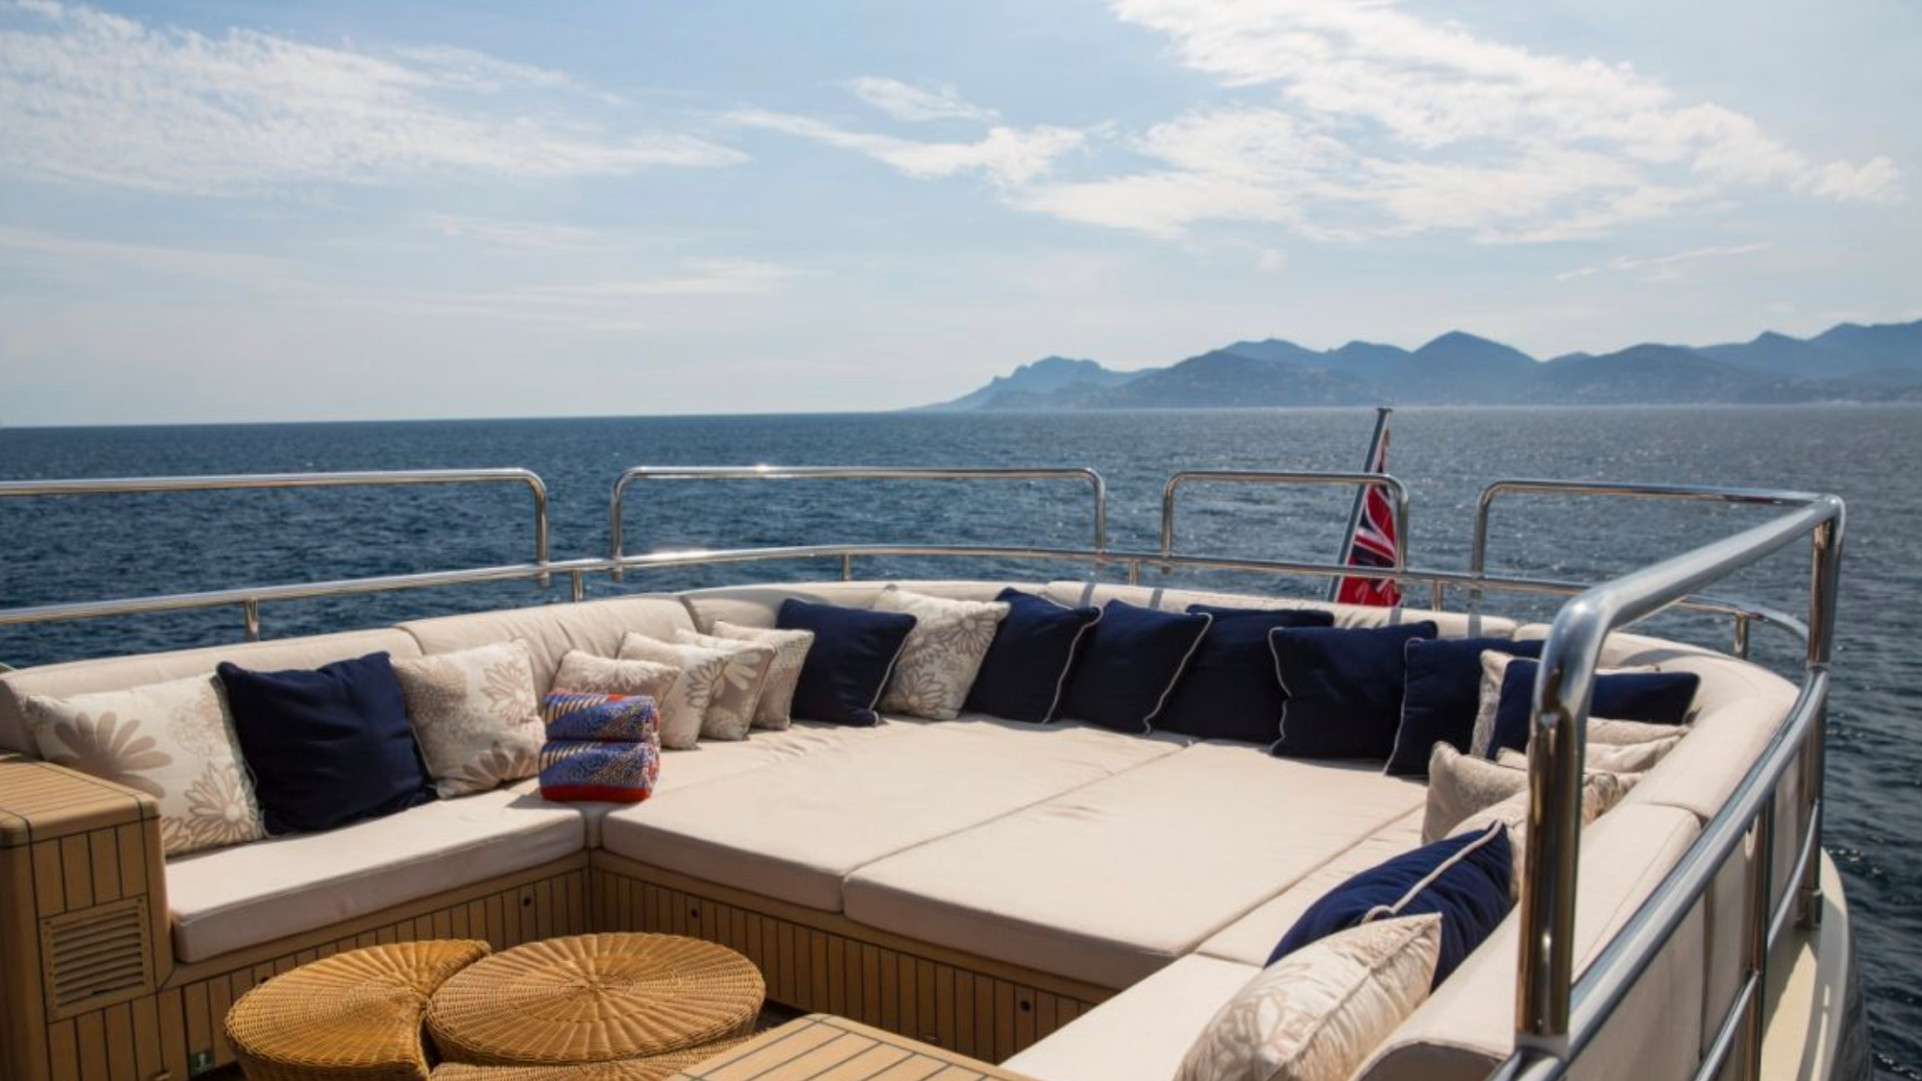 YCM 120 - Motor Boat Charter Bahamas & Boat hire in Riviera, Corsica, Sardinia, Spain, Balearics, Caribbean 5